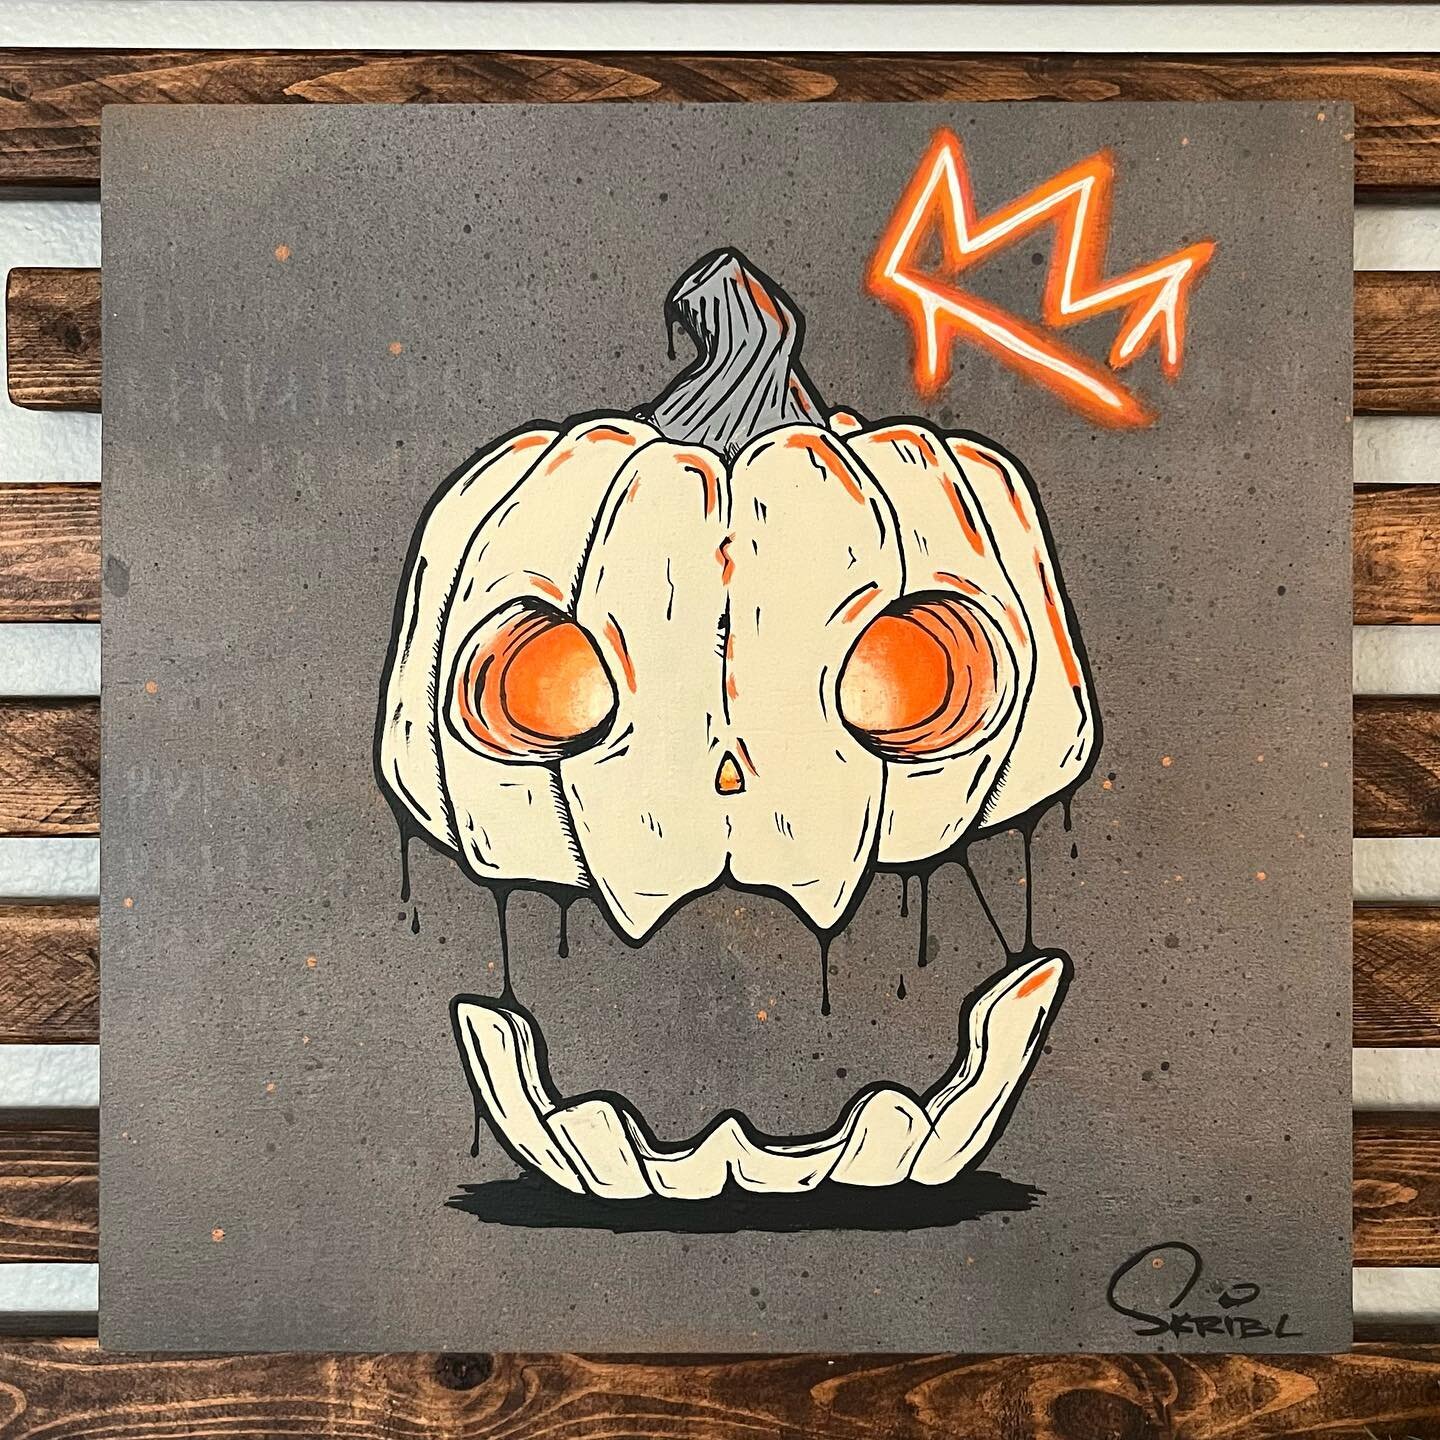 &ldquo;Pumpkin Resurrection&rdquo; 

12&rdquo;x12&rdquo; / 30cm x 30cm
Spray paint &amp; acrylic on wood

Painting is available for purchase! 

#skriblpainting #skribl #art #artist #pumpkin #jackolantern #skull #painting #spraypaint #acrylicpainting 